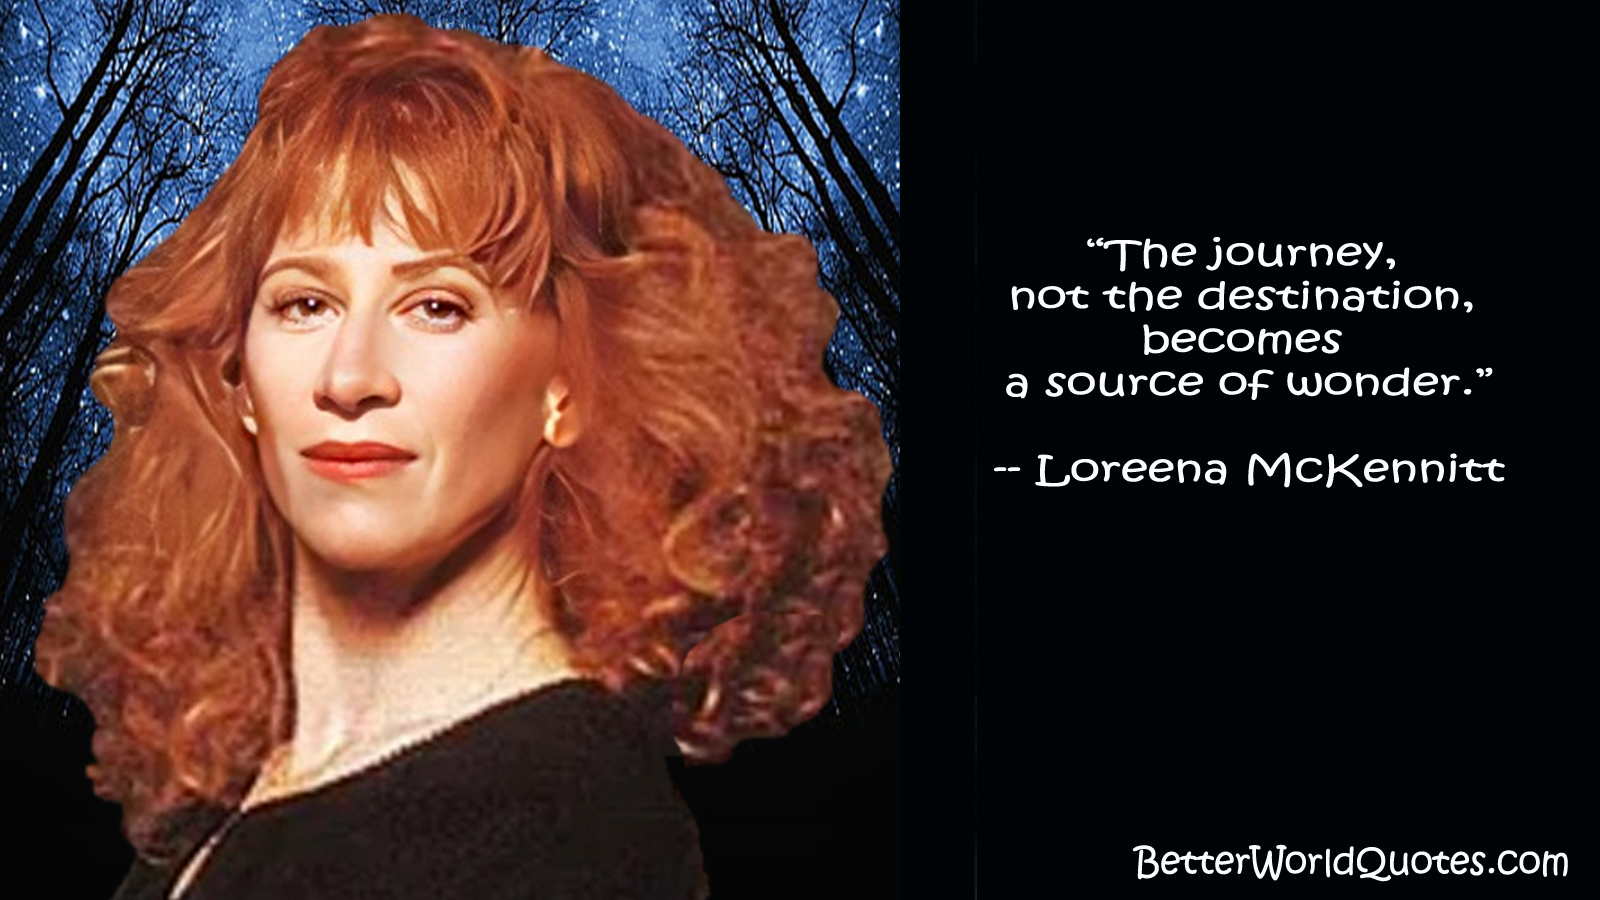 Loreena McKennitt: The journey, not the destination, becomes a source of wonder.